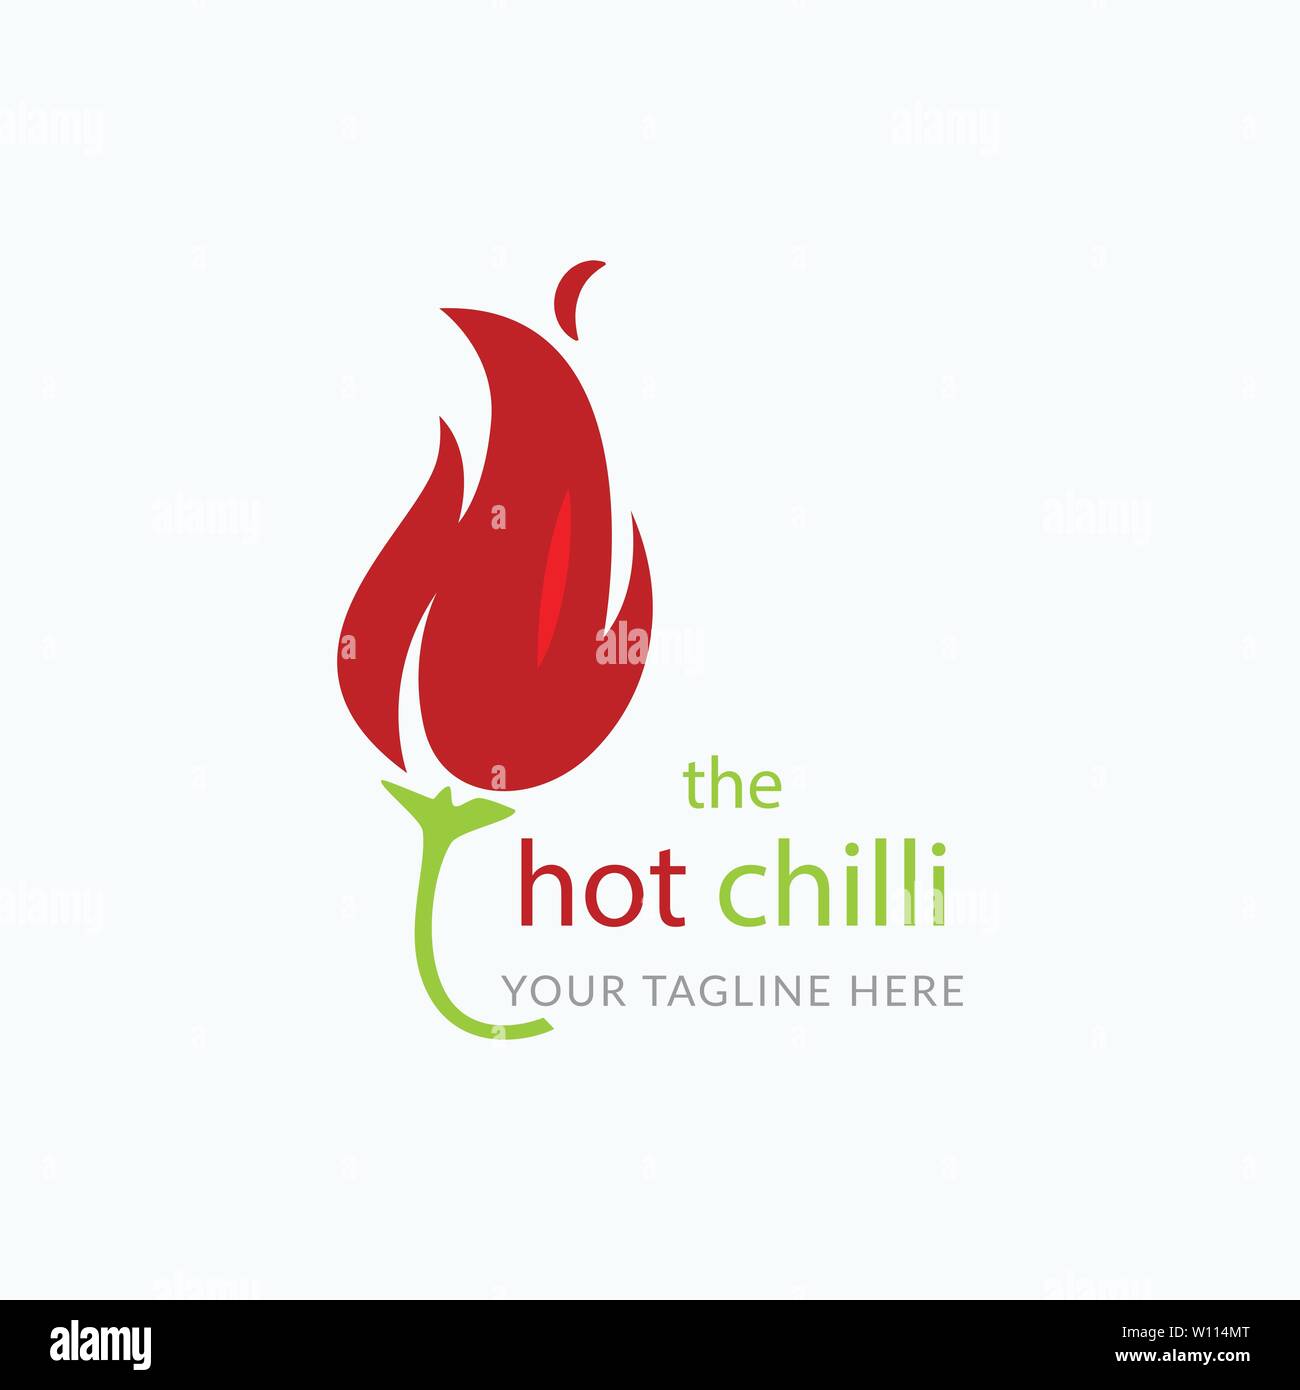 Chili house logo design template Stock Vector